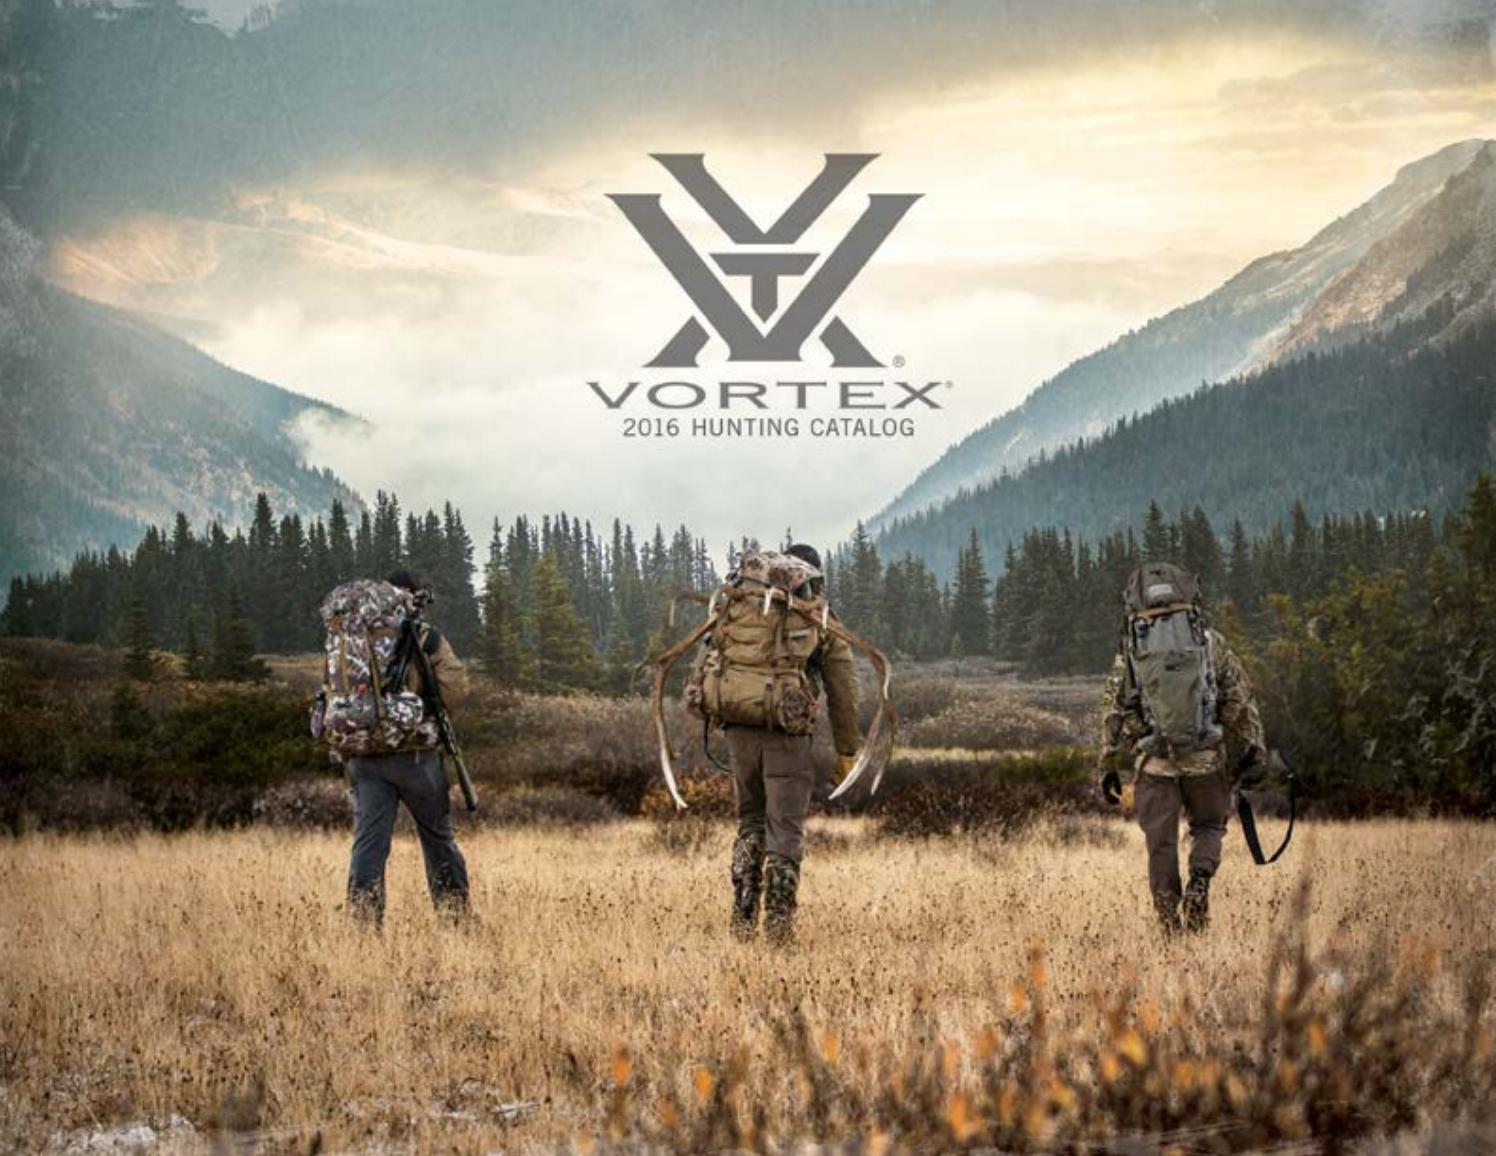 Vortex optics hunting katalog eng by astro as